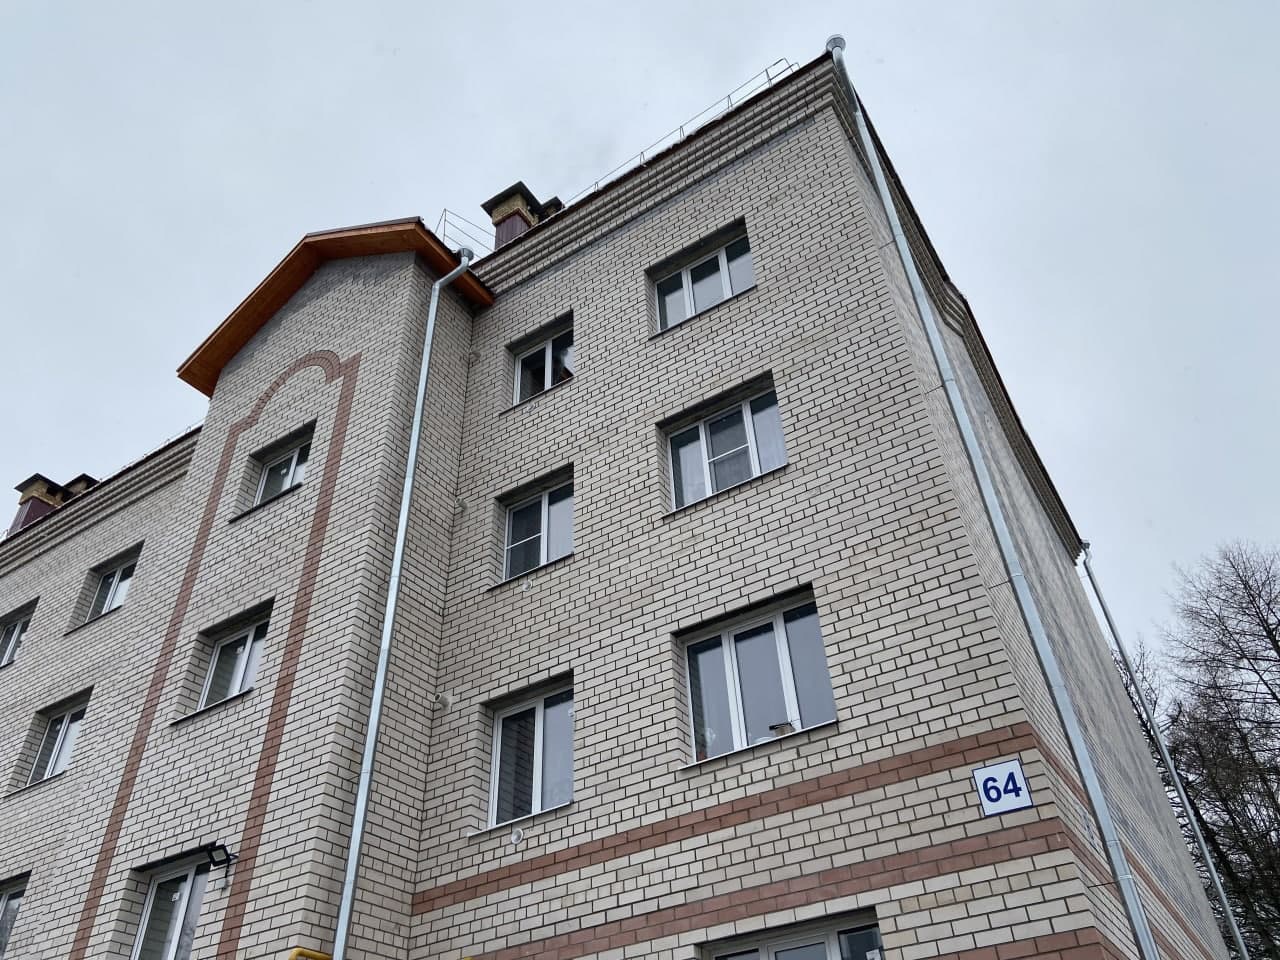 Три даниловские семьи получили ключи от новых квартир